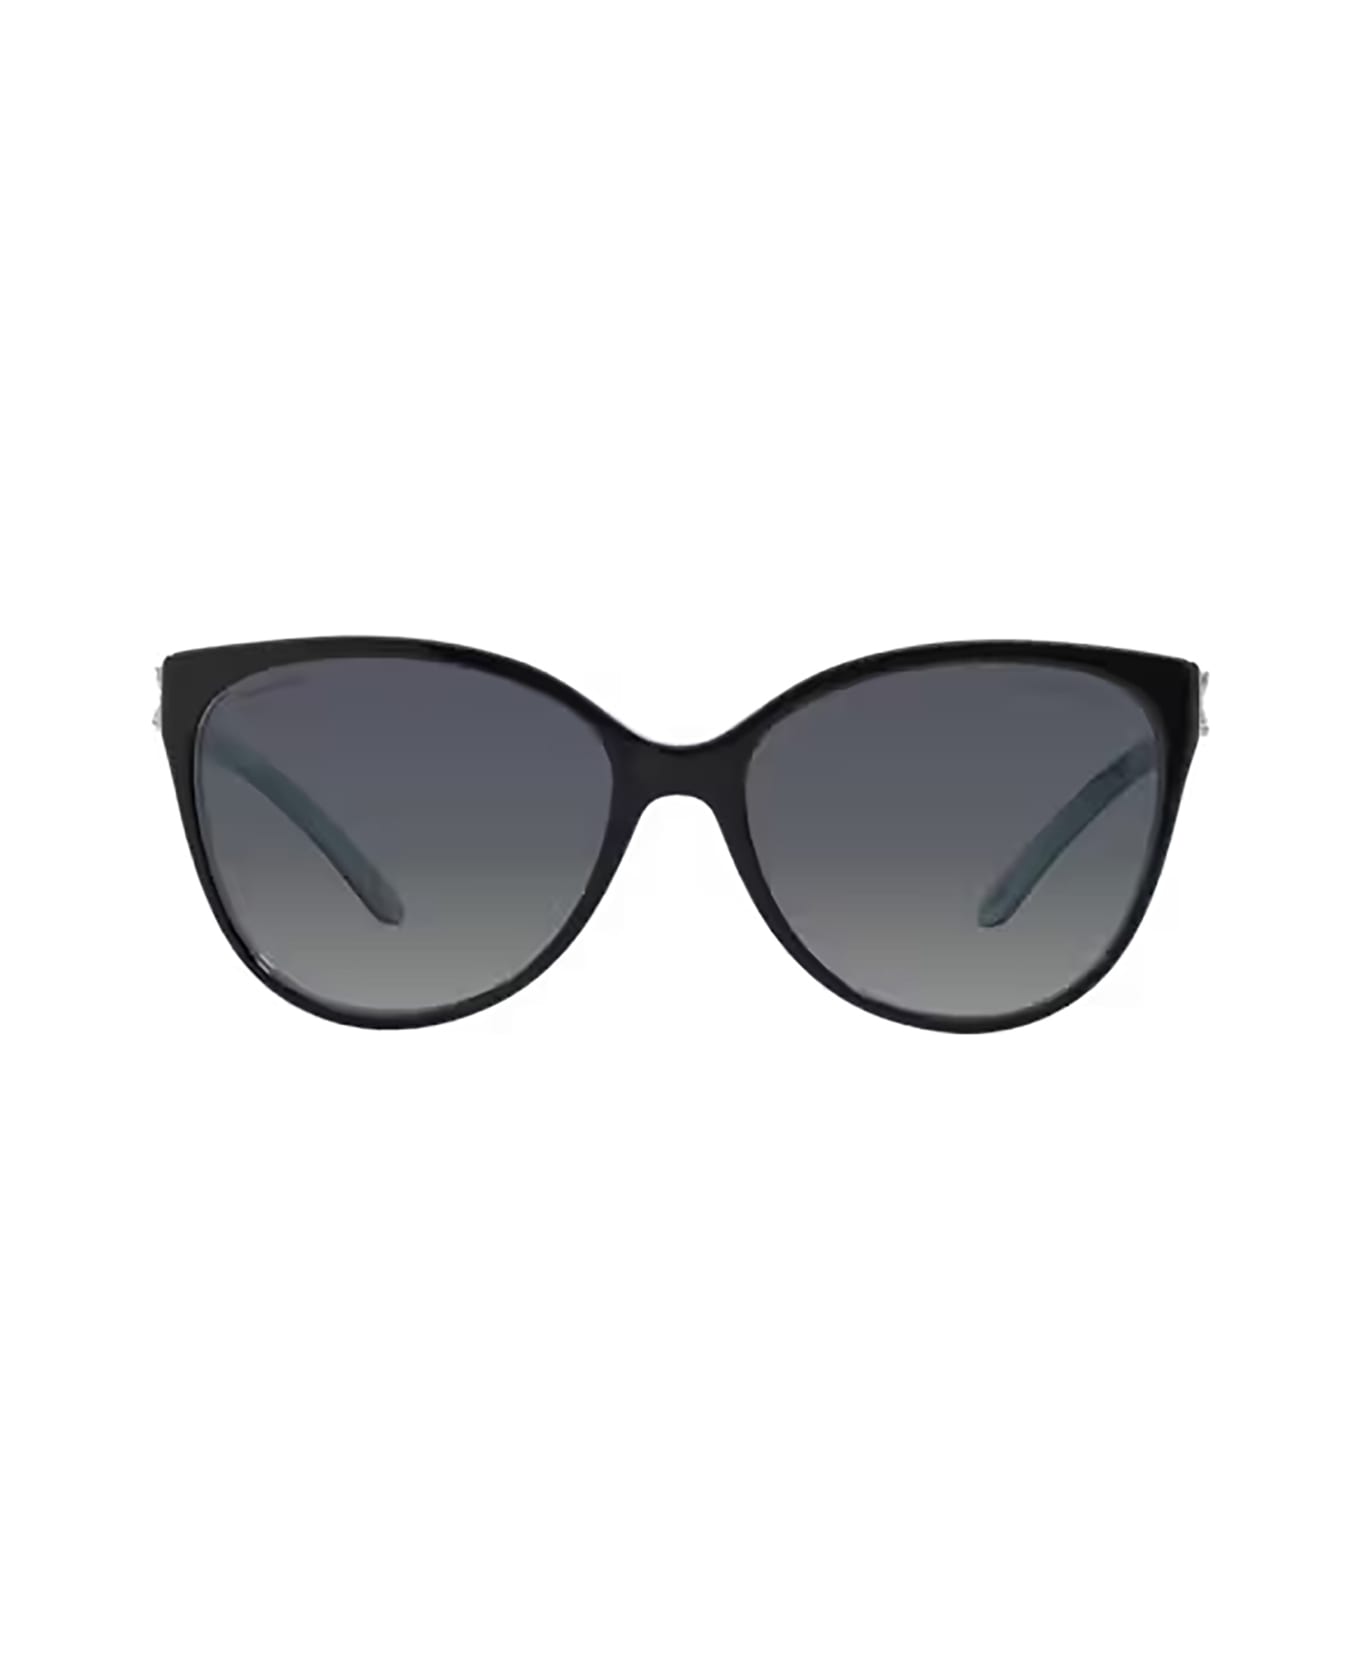 Tiffany & Co. Tf4089b Black On Tiffany Blue Sunglasses - Black on tiffany blue